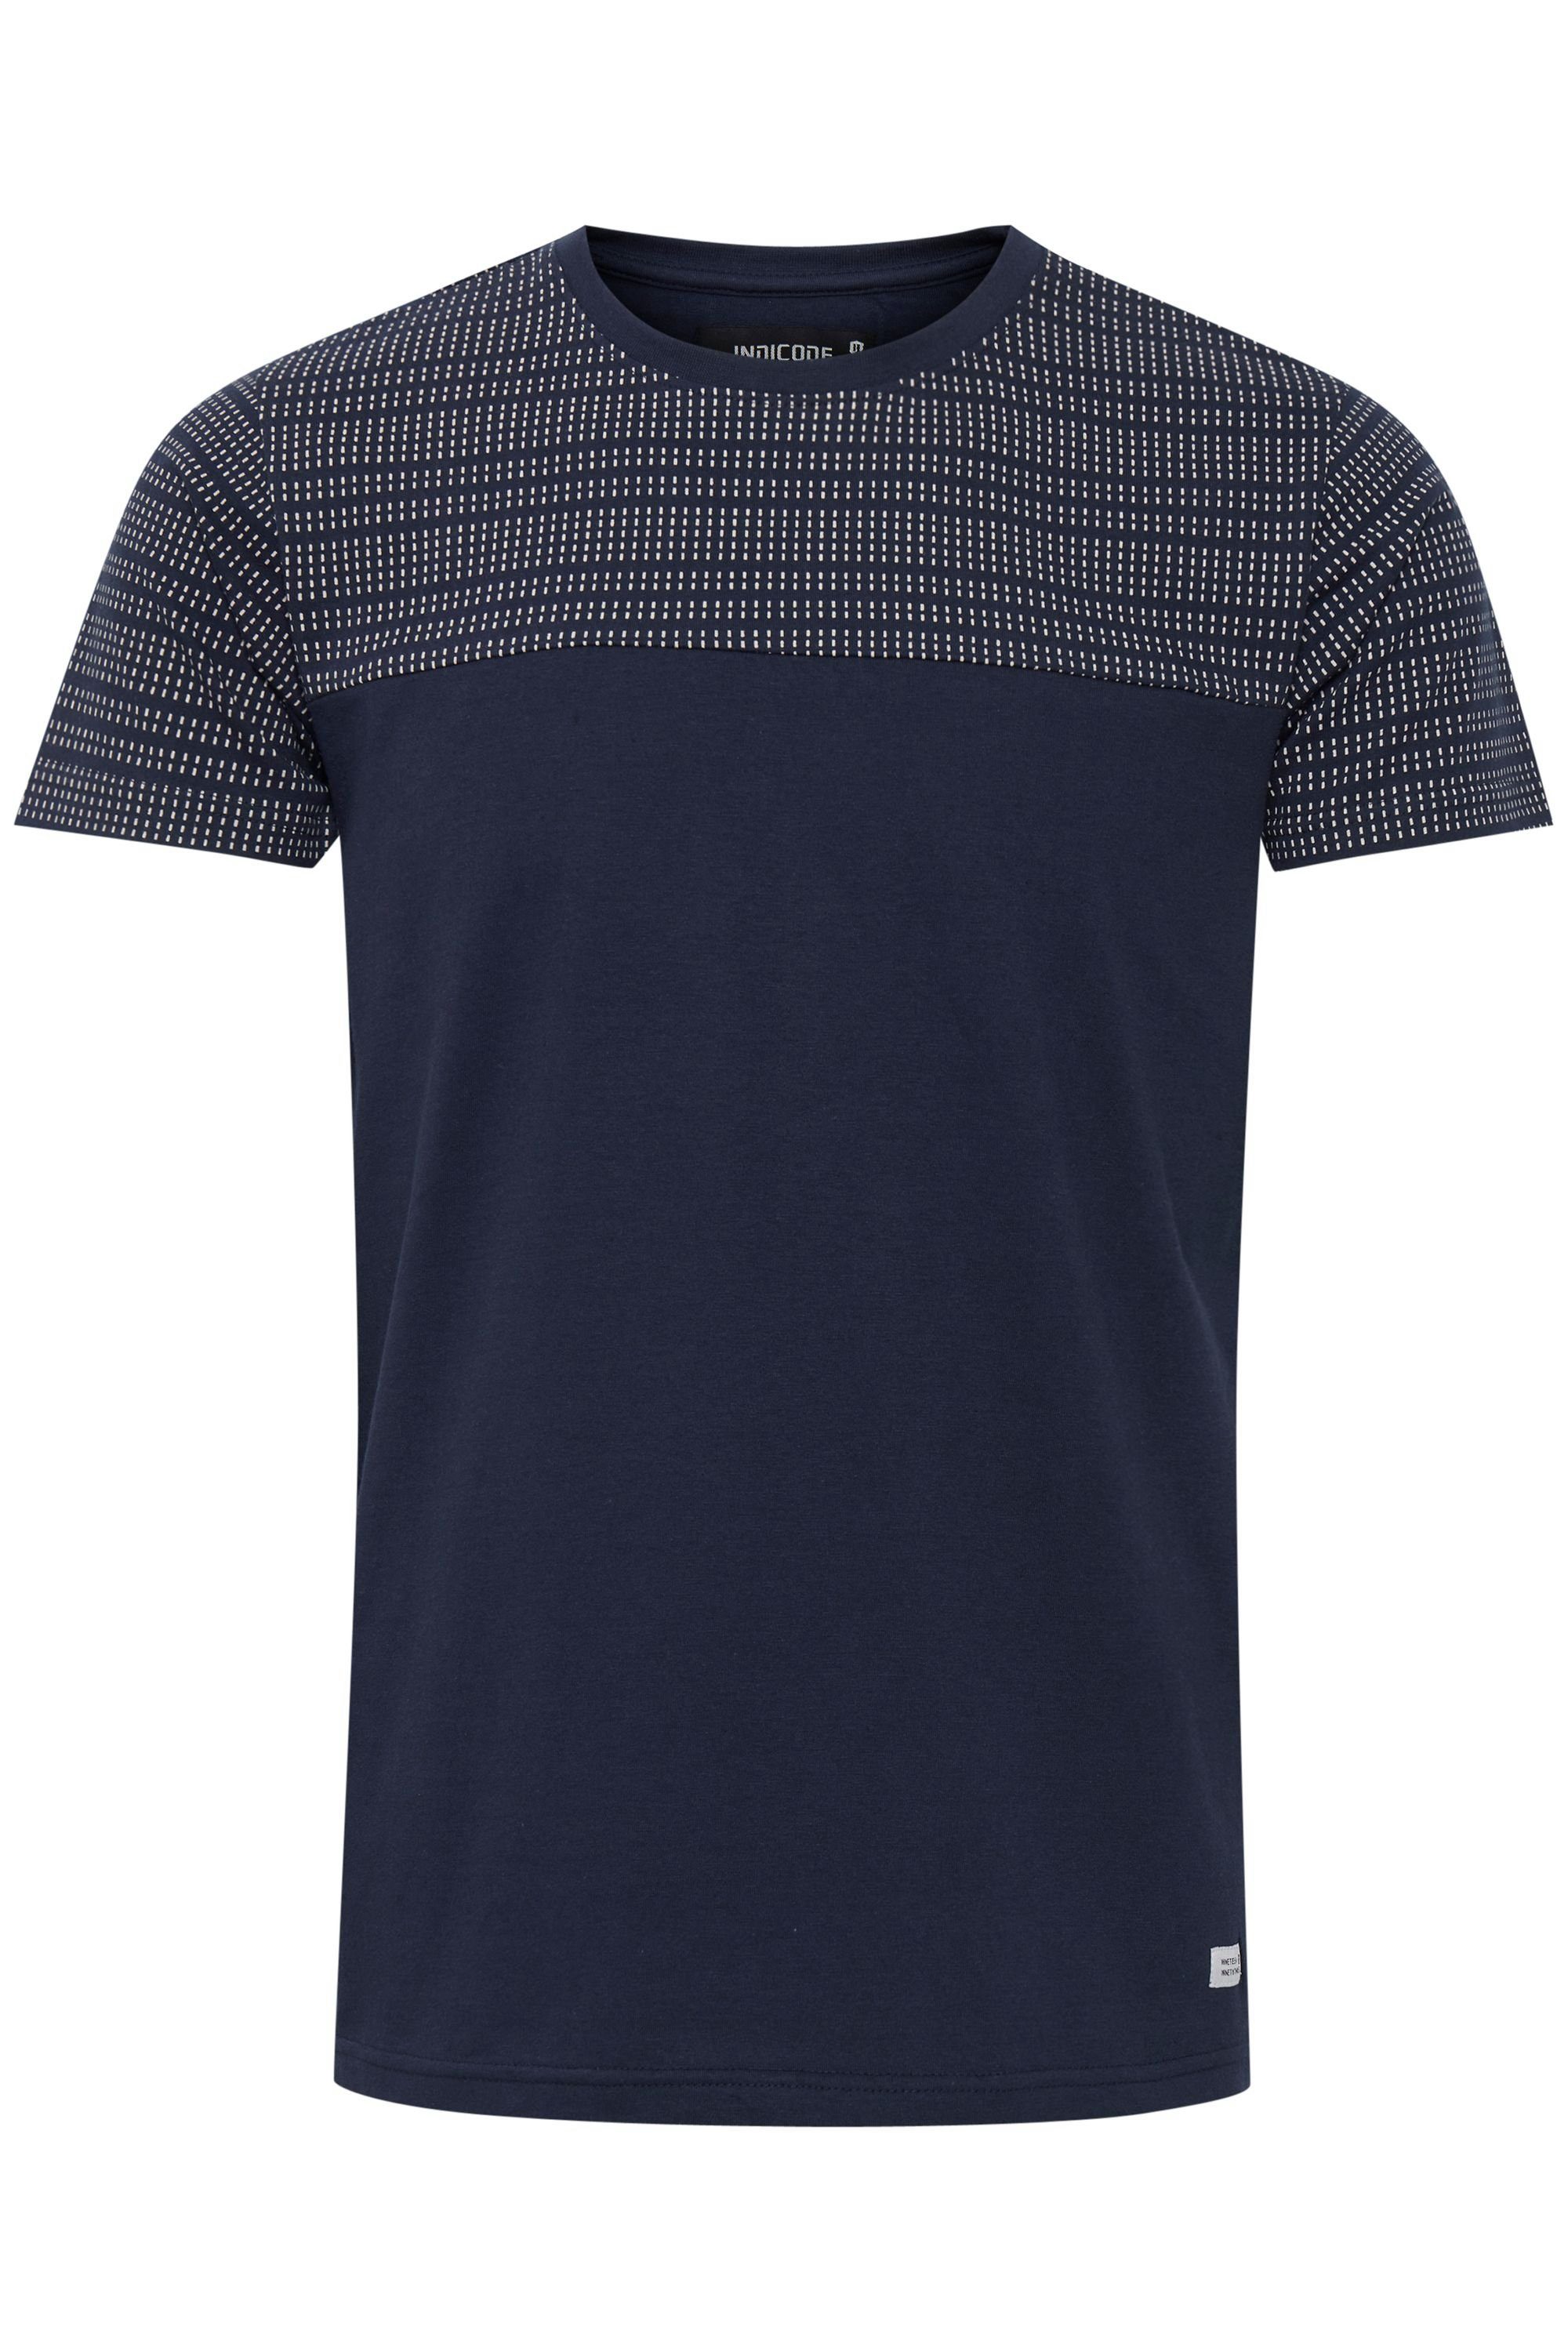 (400) IDRosto Navy Colorblock-Look Indicode im T-Shirt T-Shirt